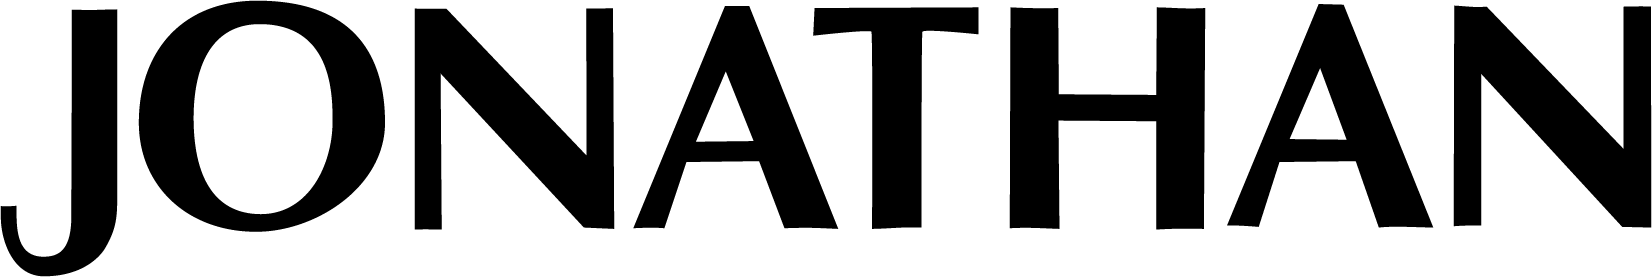 Jonathan logo